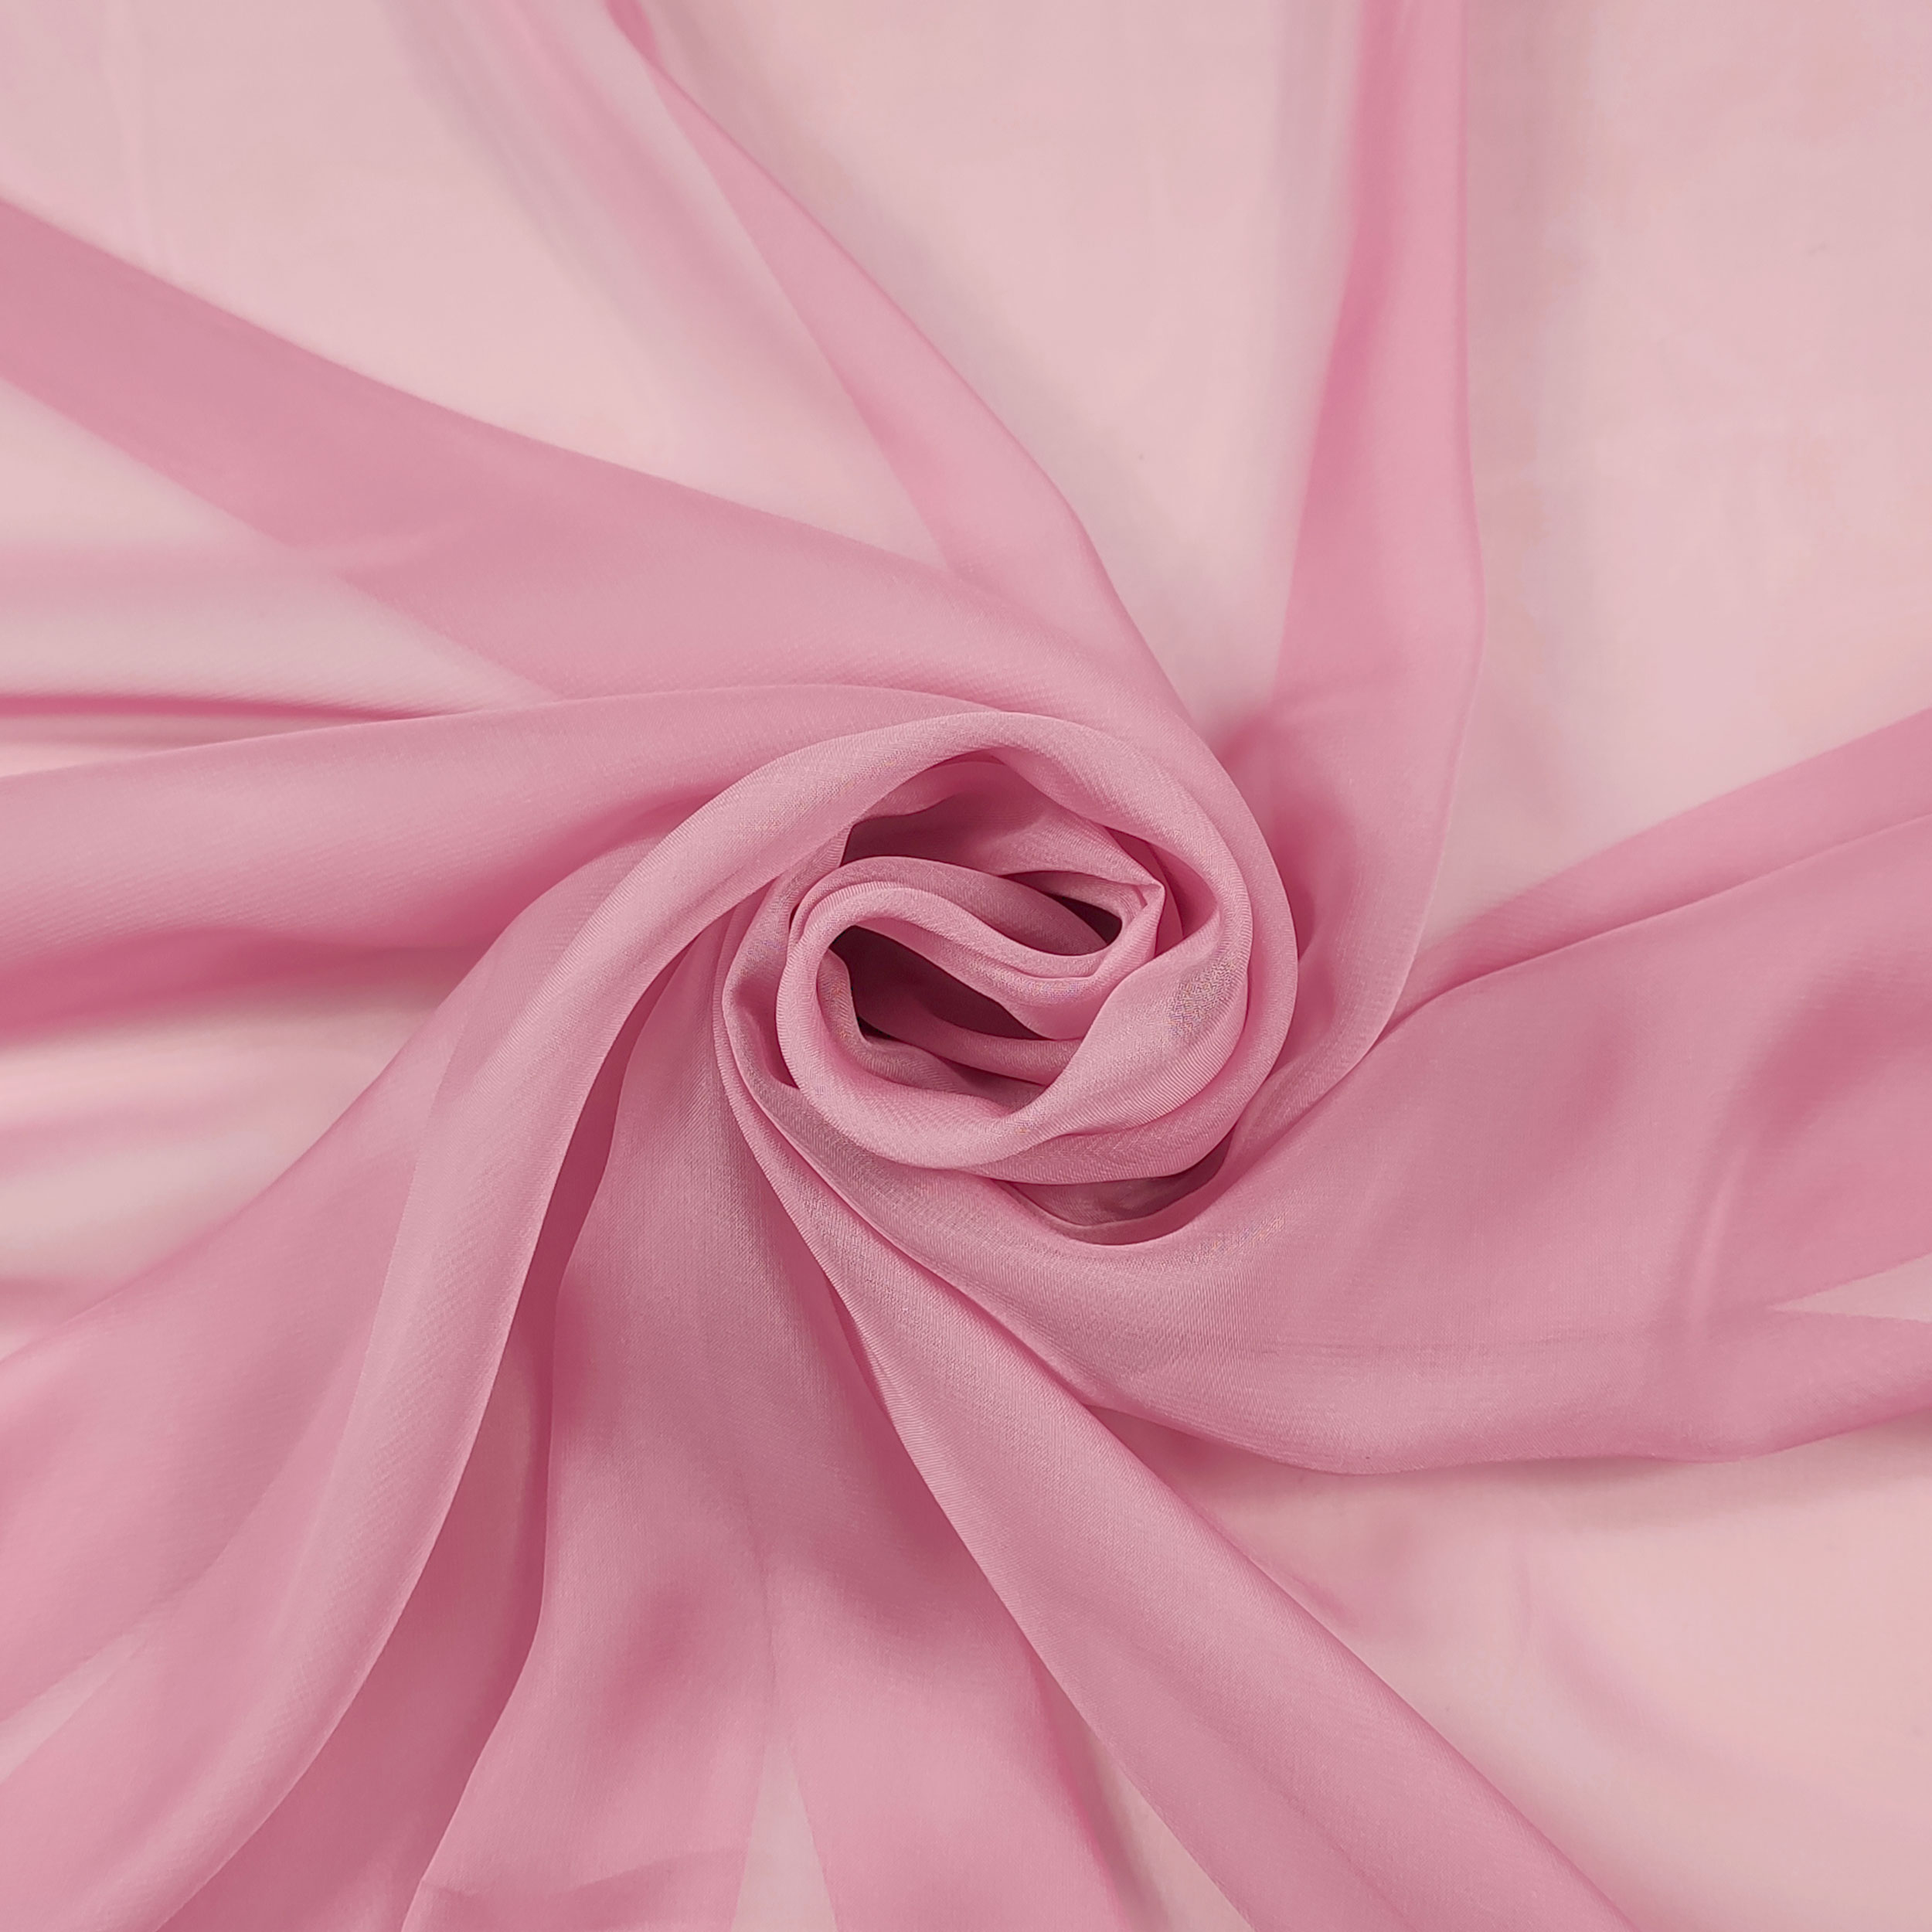 tessuto chiffon rosa